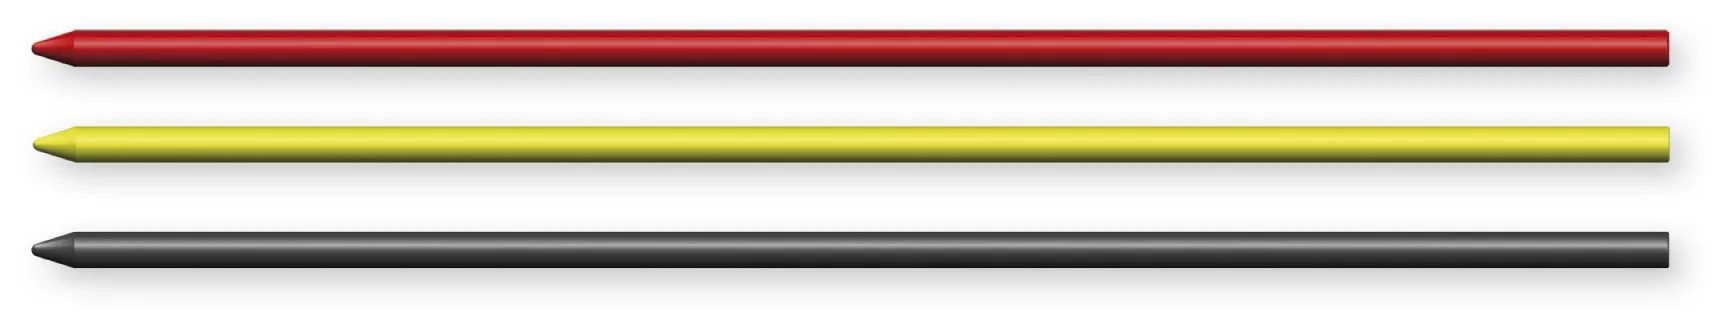 Набор сменных стержней к карандашам PICA DRY basic(4020)